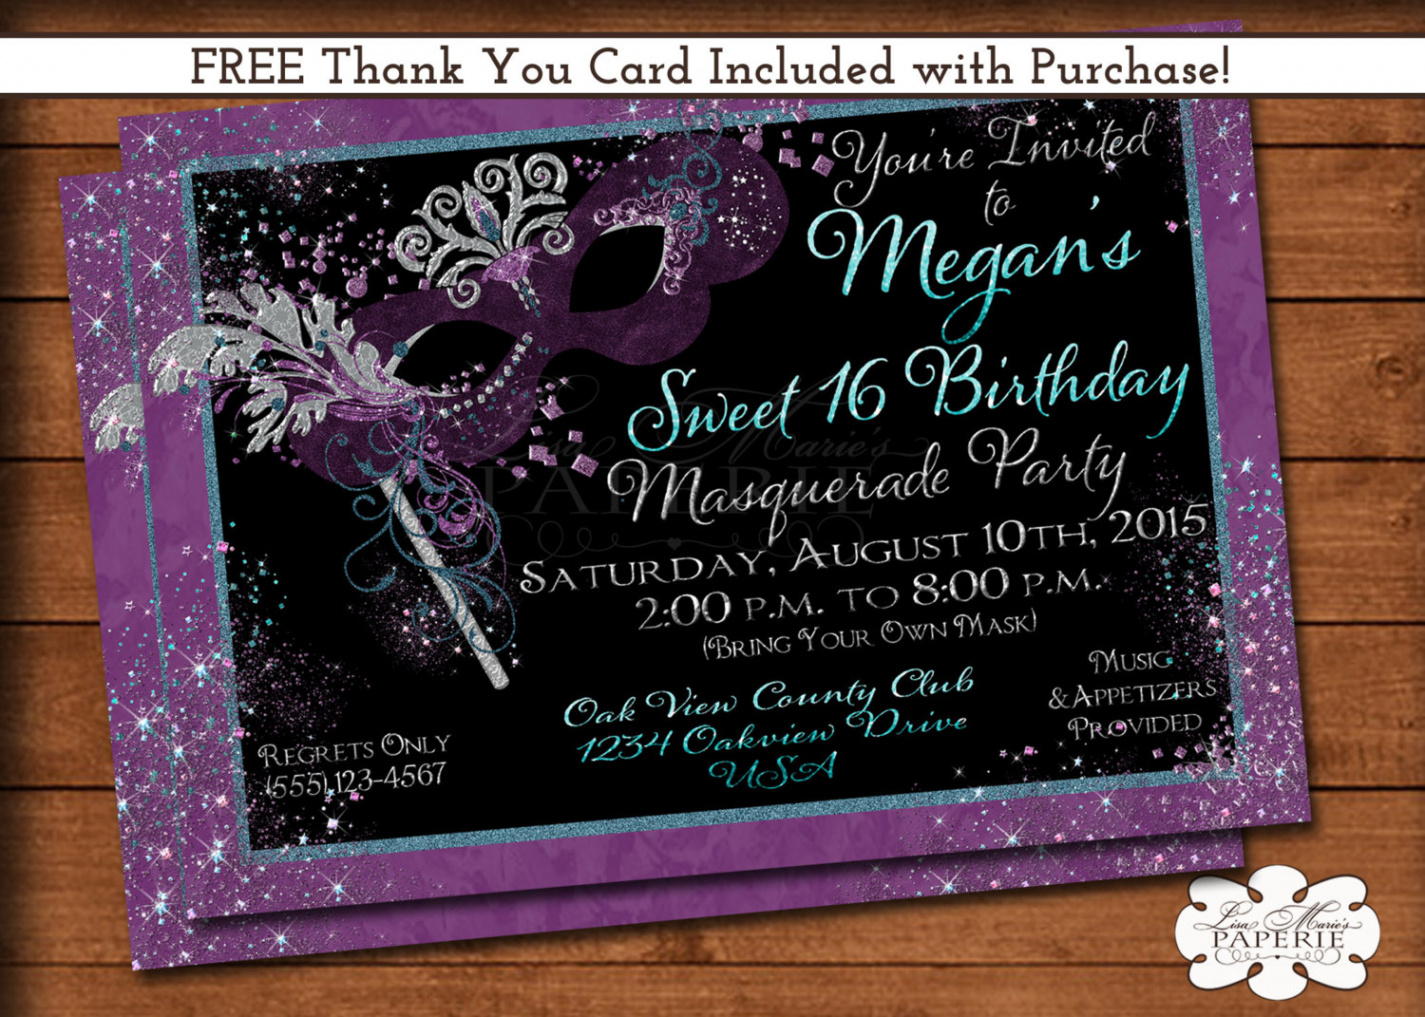 Inspirational Free Printable Sweet 16 Birthday Party Invitations - Free Printable Sweet 16 Birthday Party Invitations